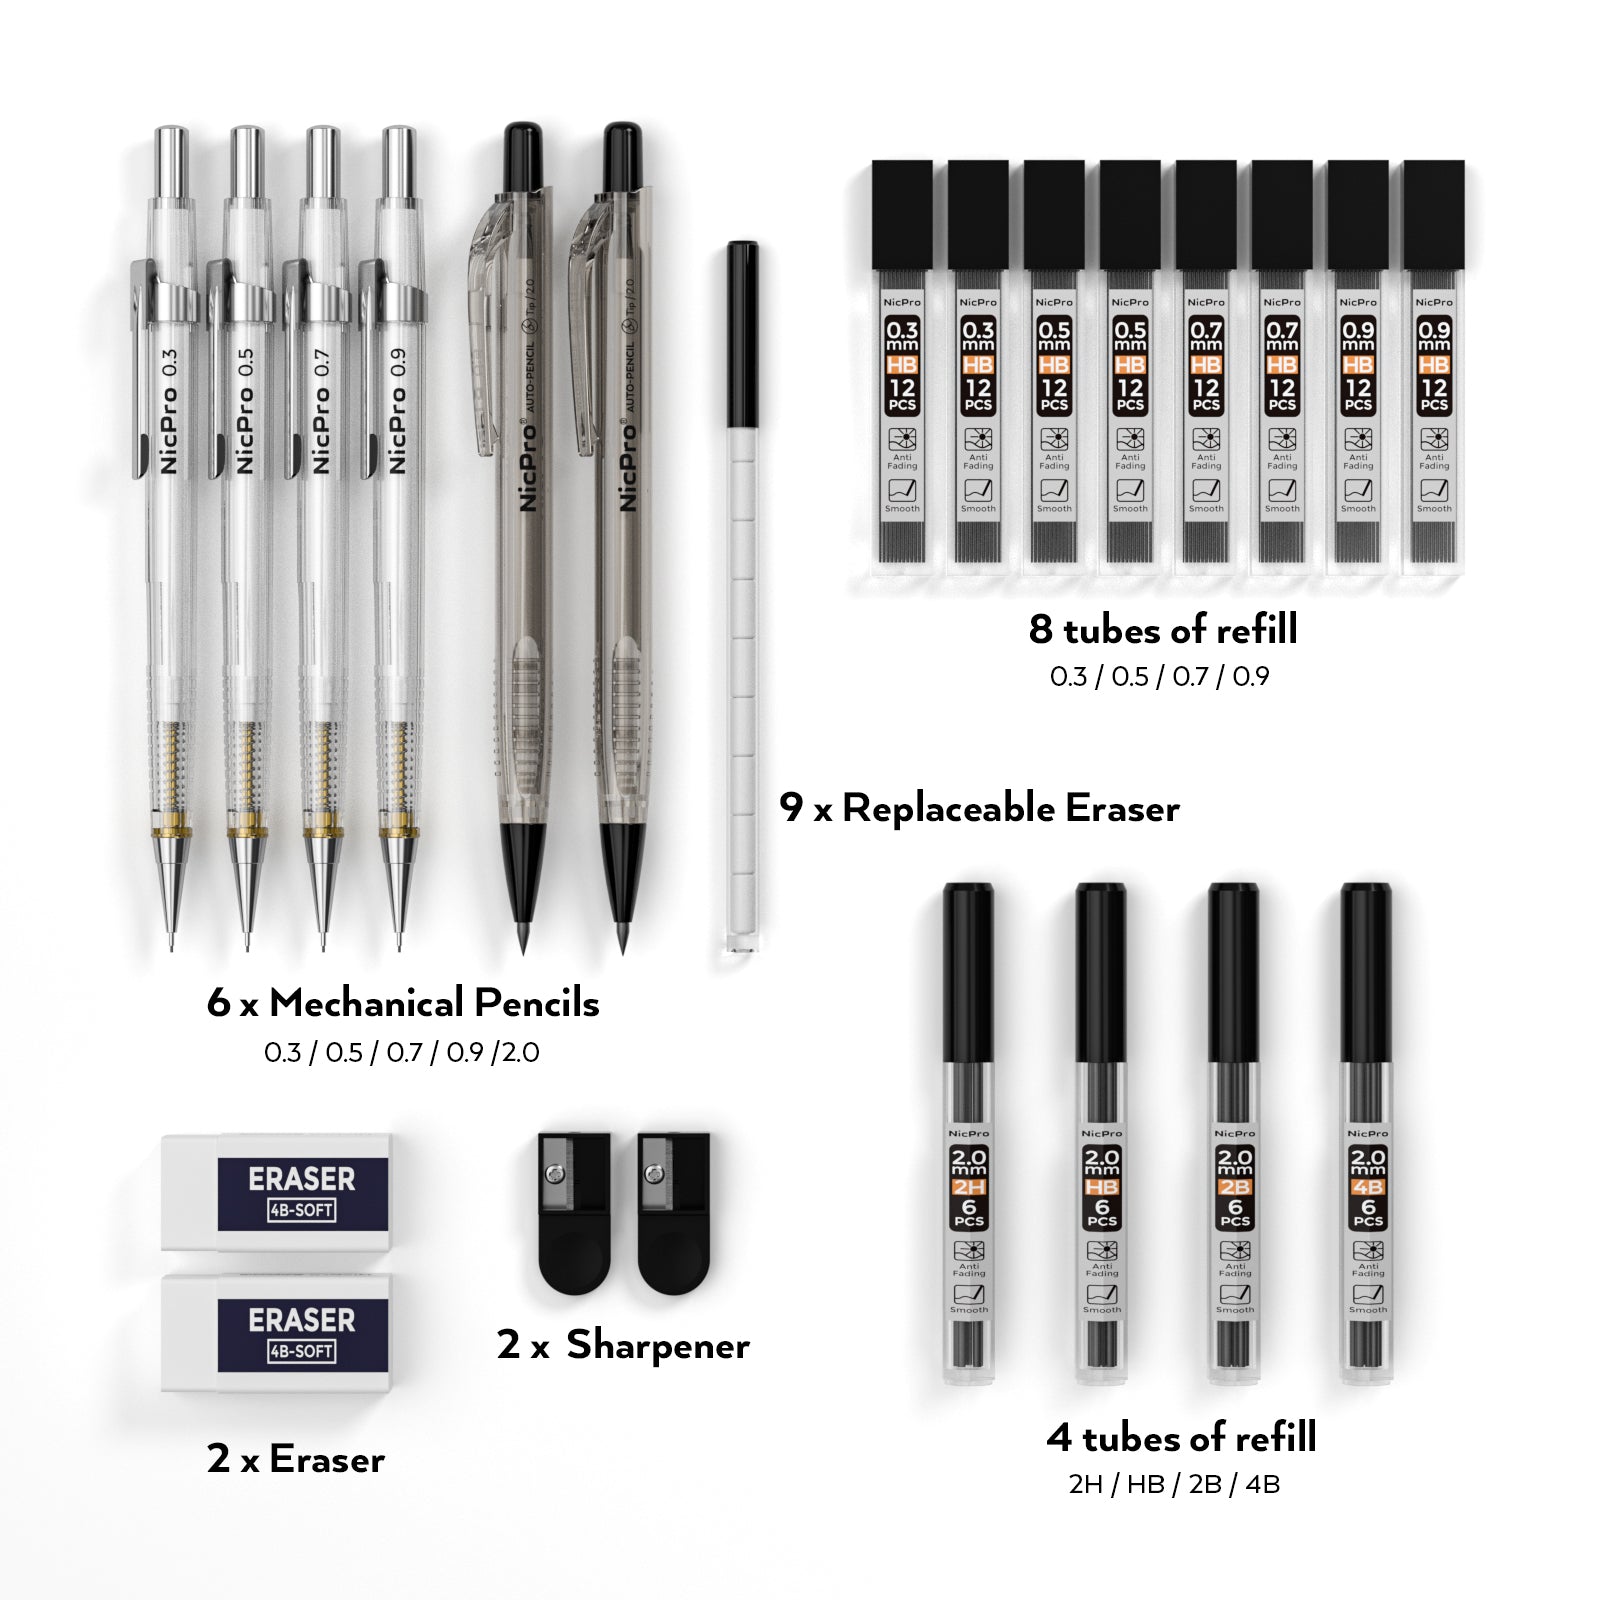  H & B 72-Piece Professional Art Pencil Supply Set